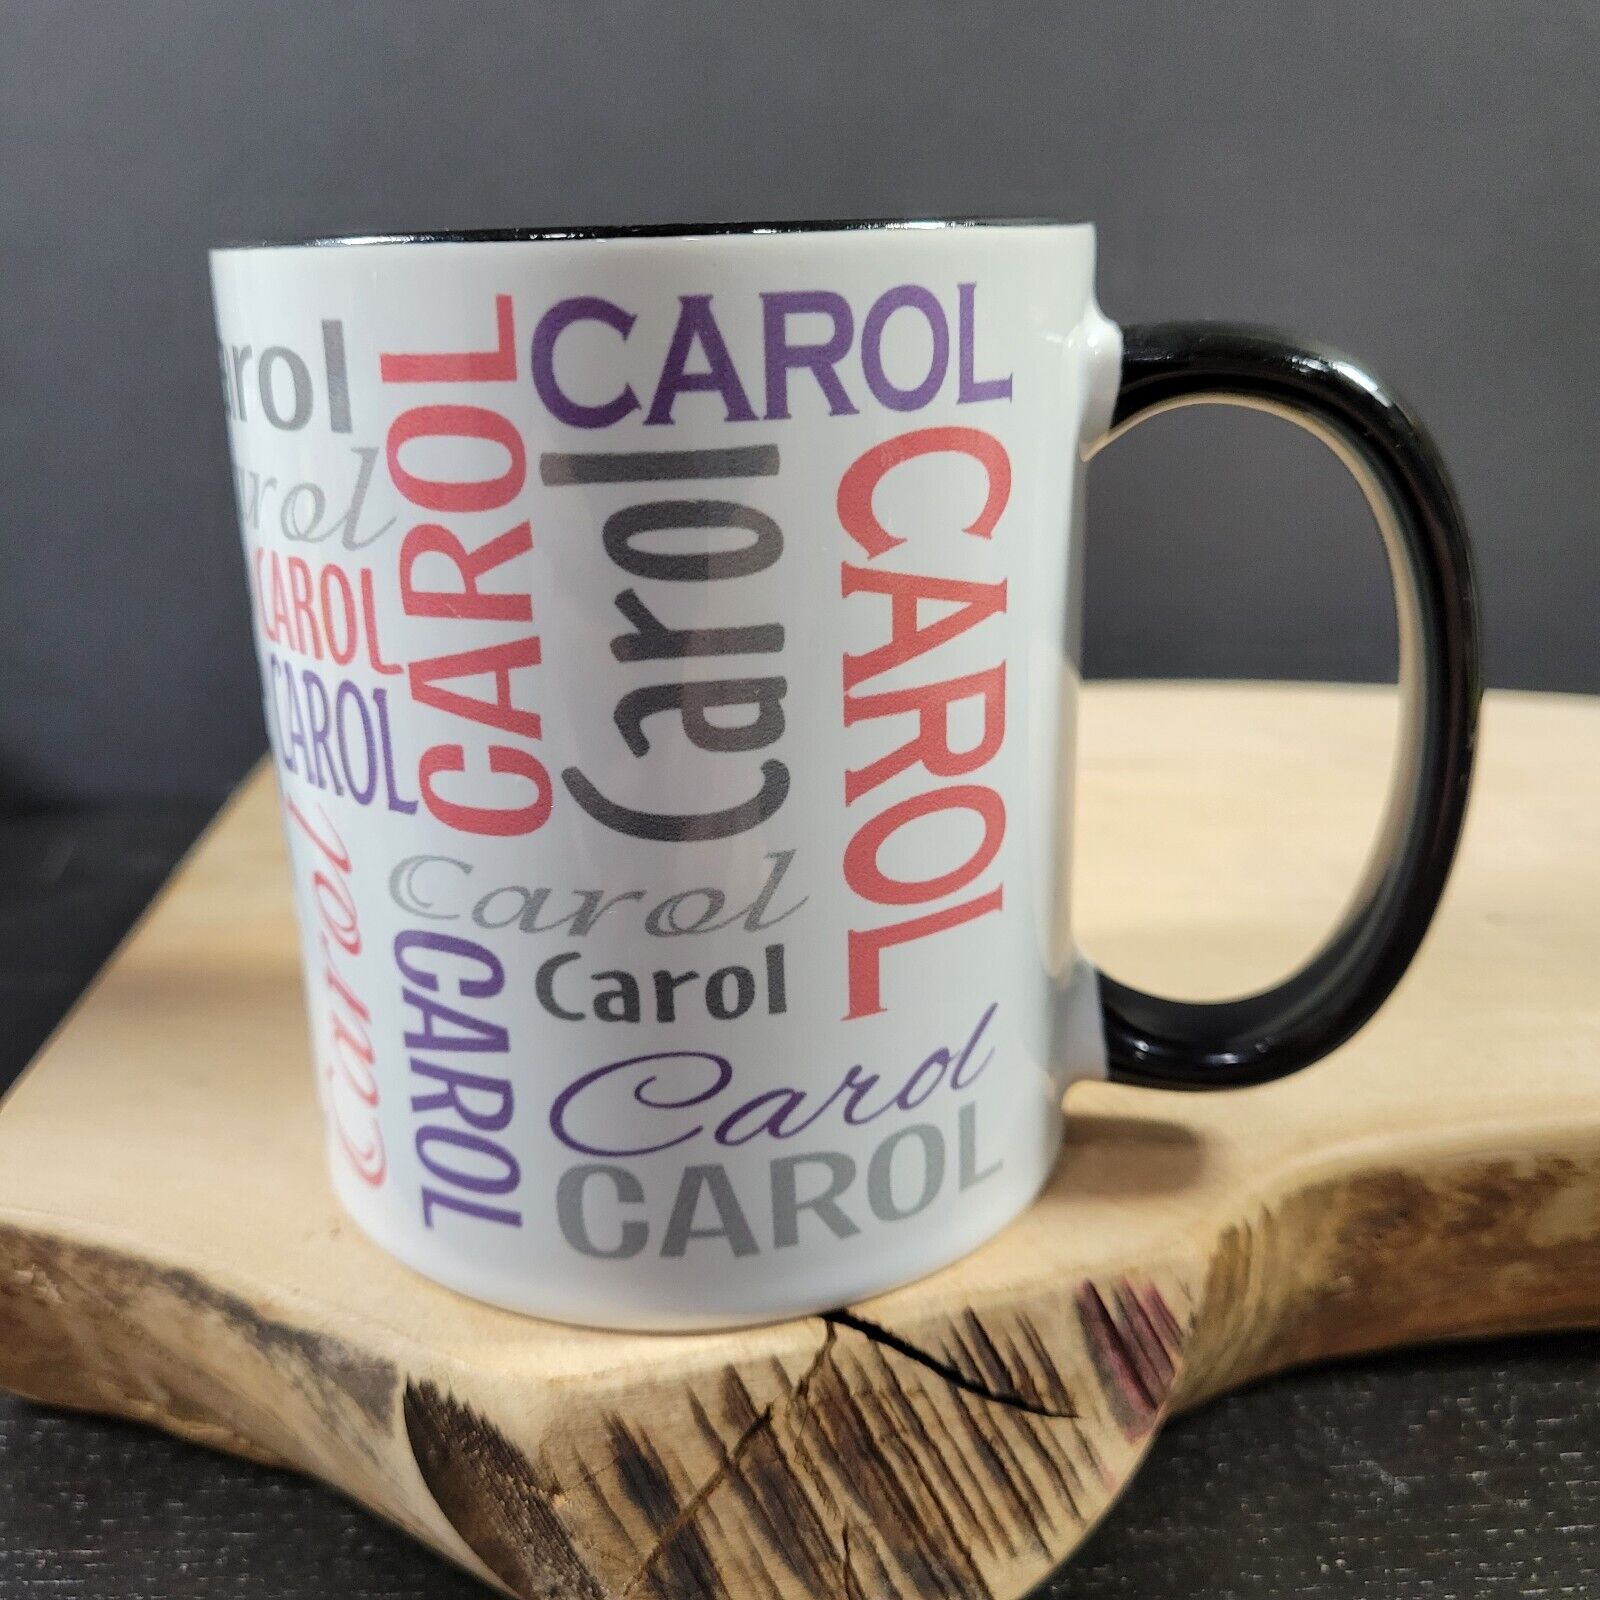 CAROL Personalized Coffee Mug Cup Name White Black Handle Orca Coatings Novelty